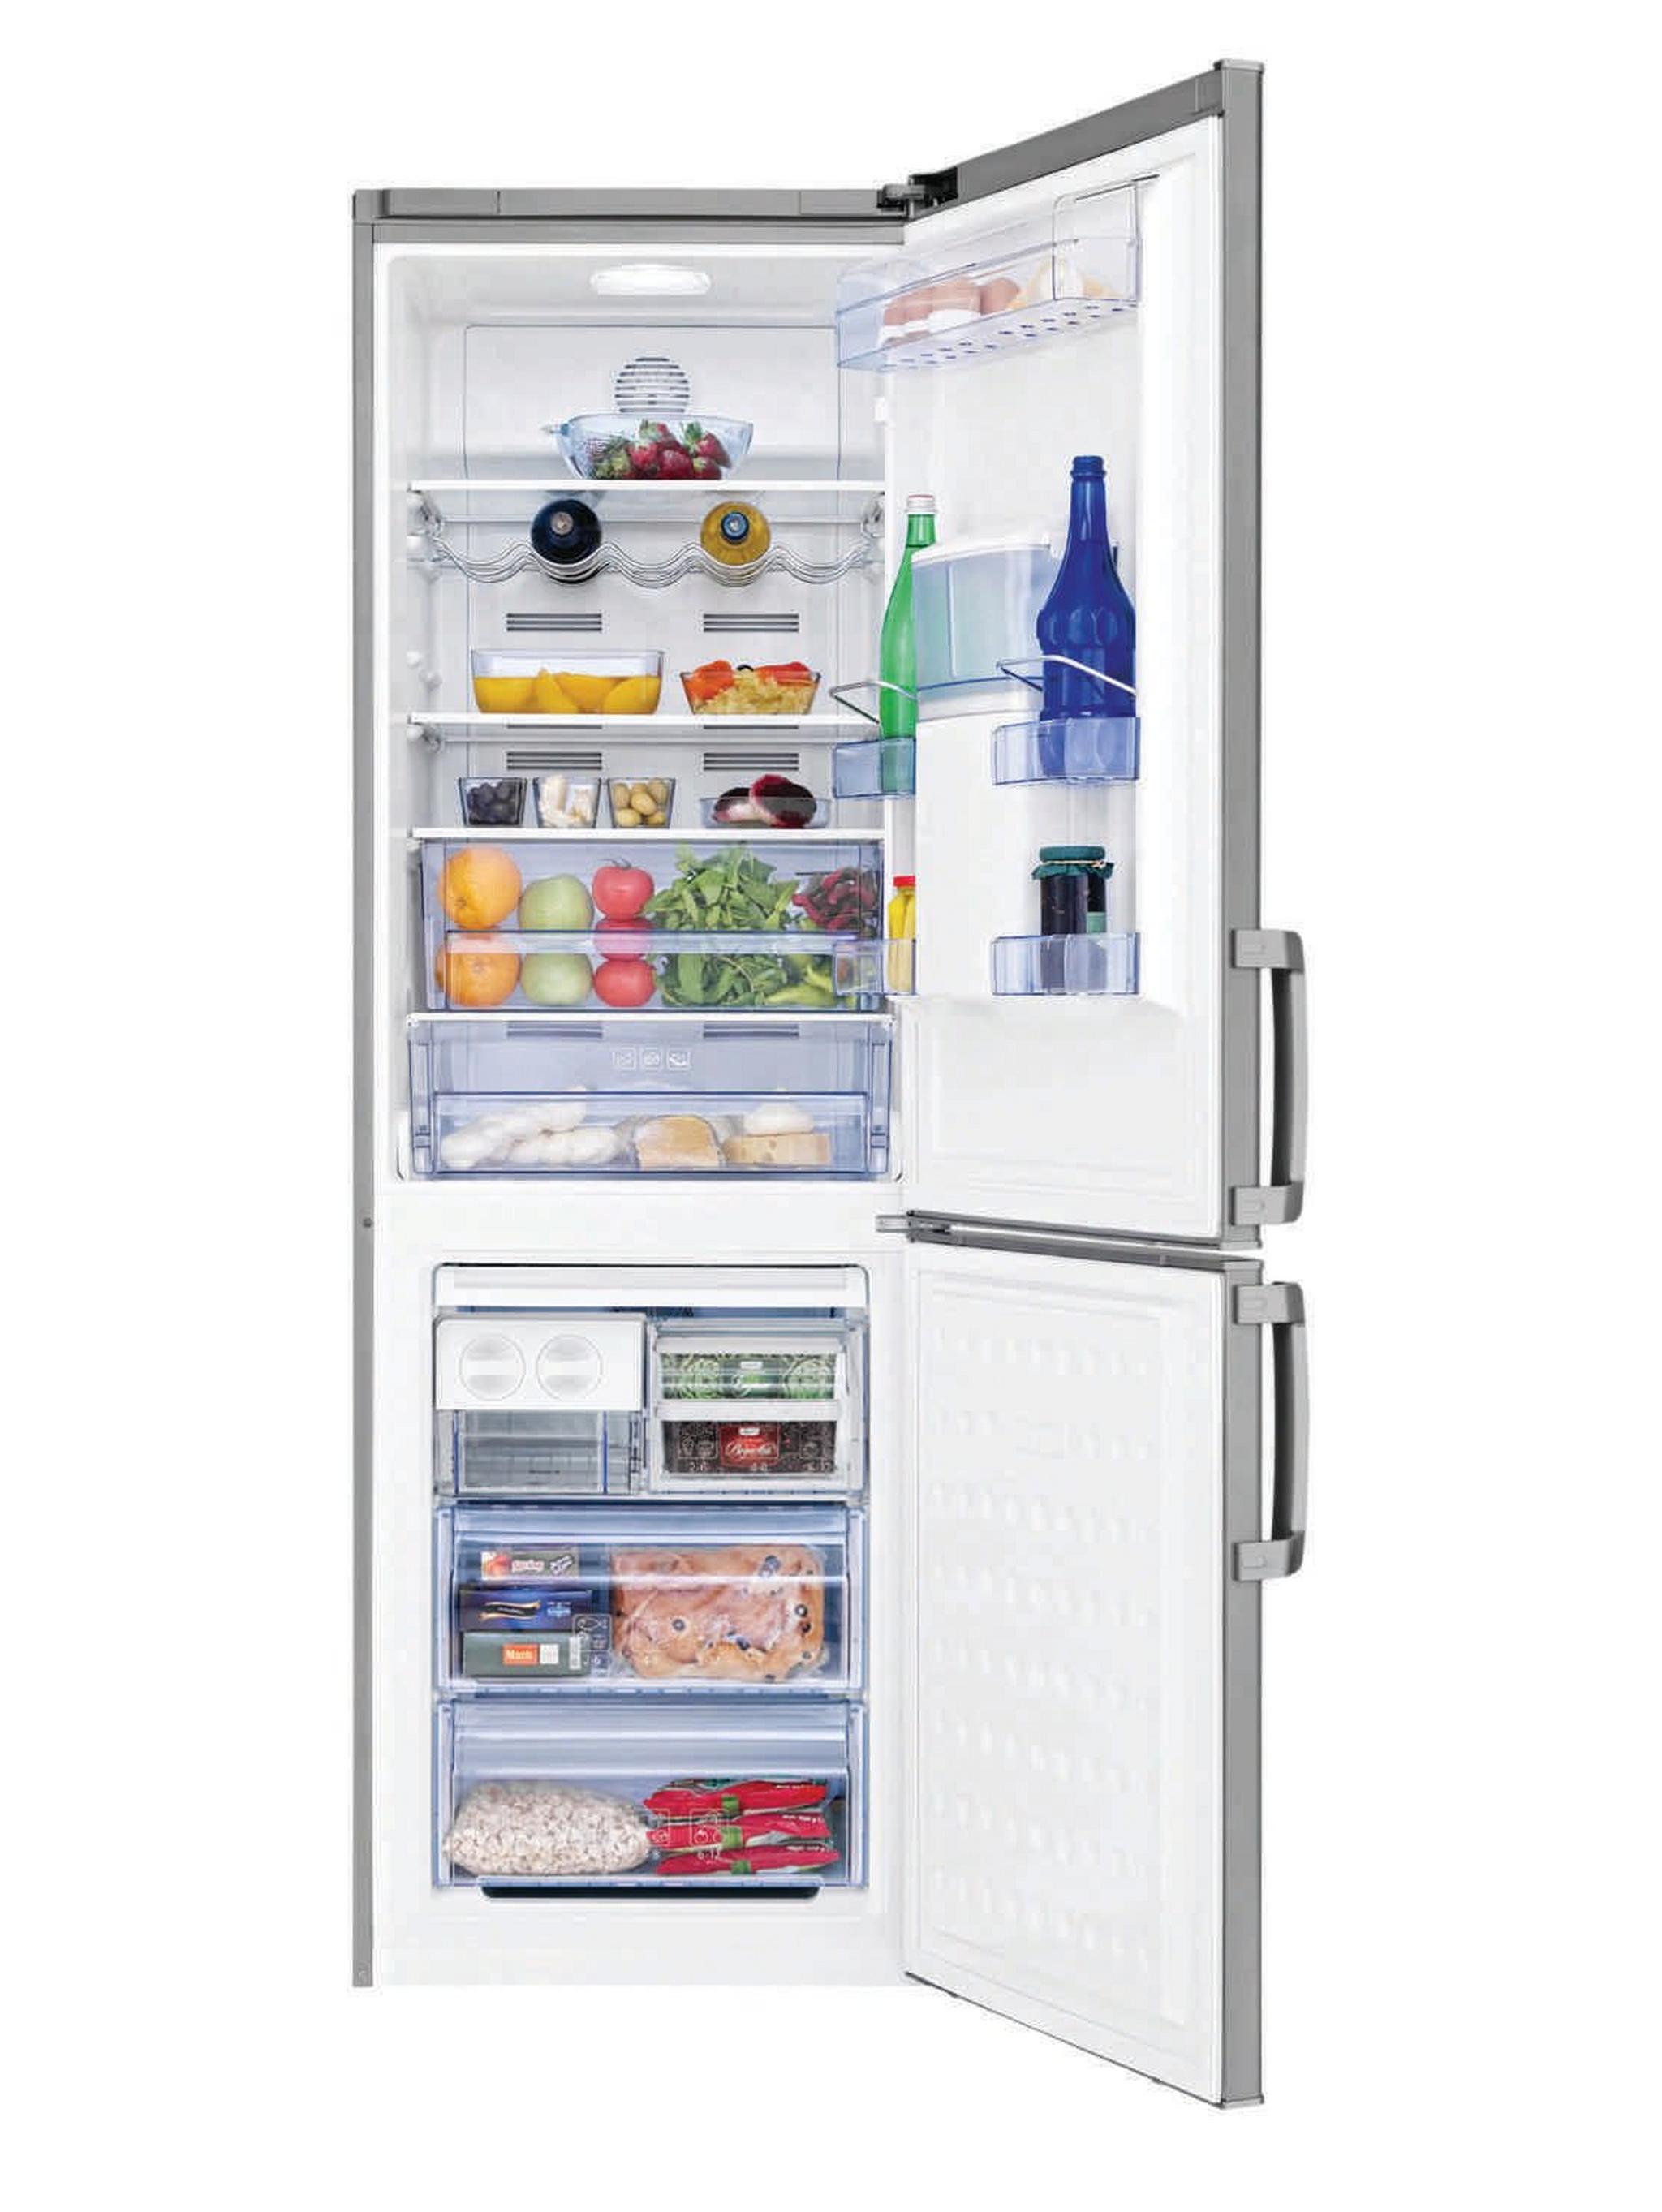 Beko Bottom Mount Refrigerator - 14 CFT - Silver